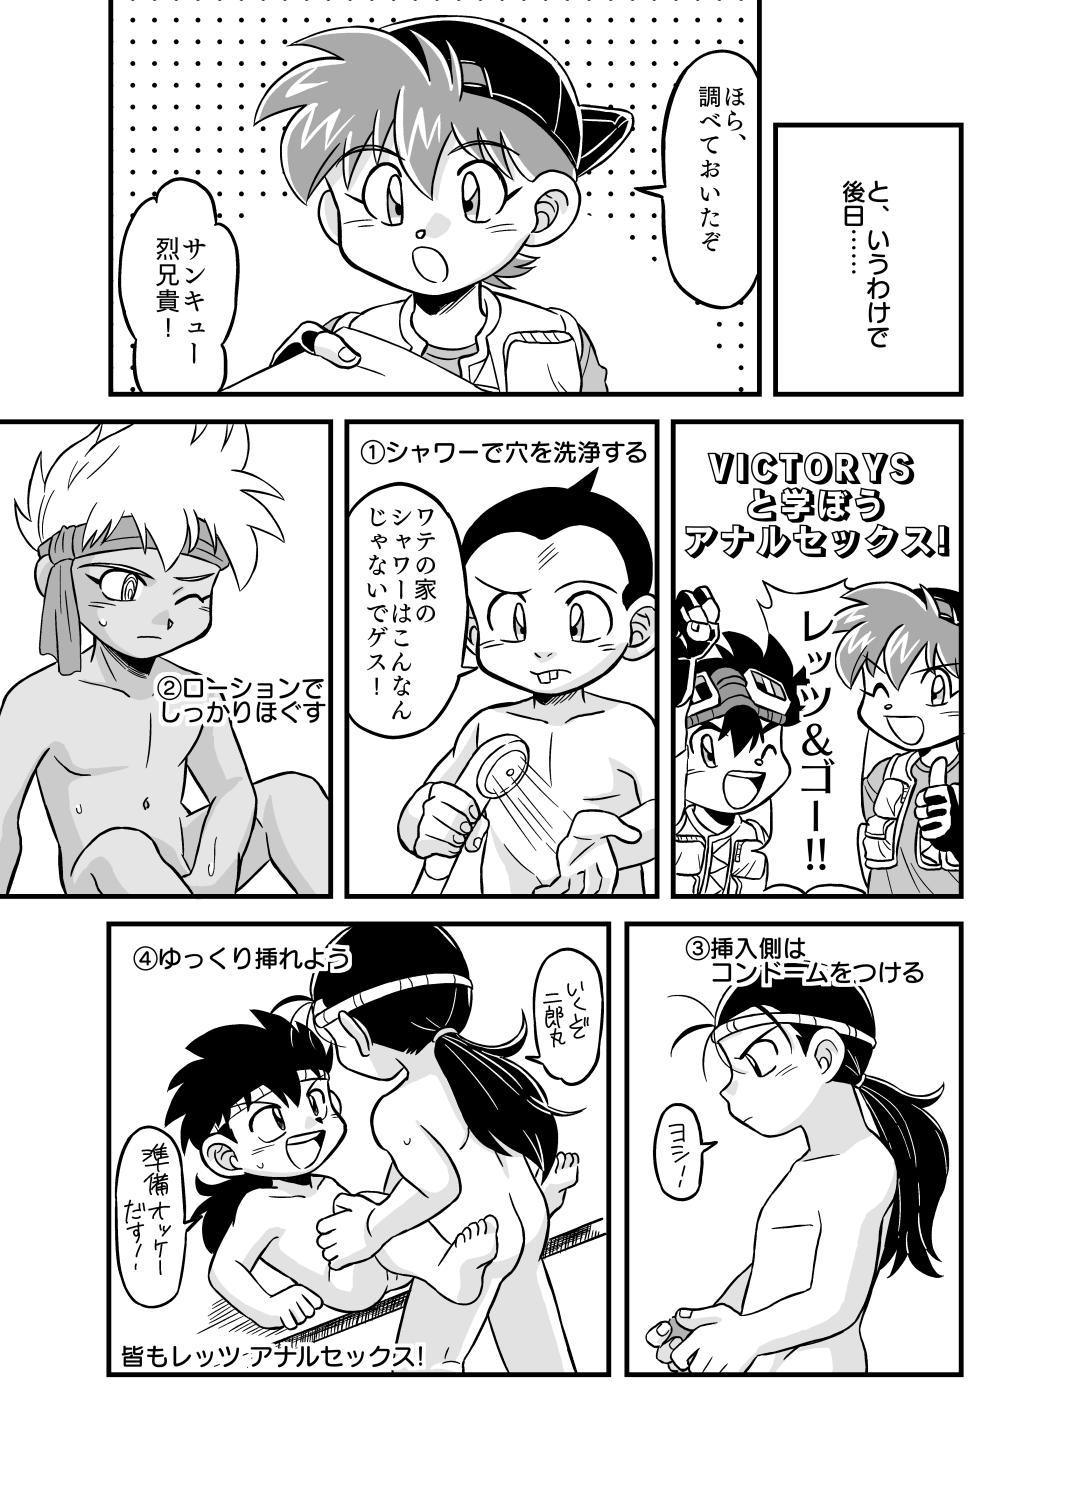 Tit 性の世界へレッツゴー!! - Bakusou kyoudai lets and go Breast - Page 6